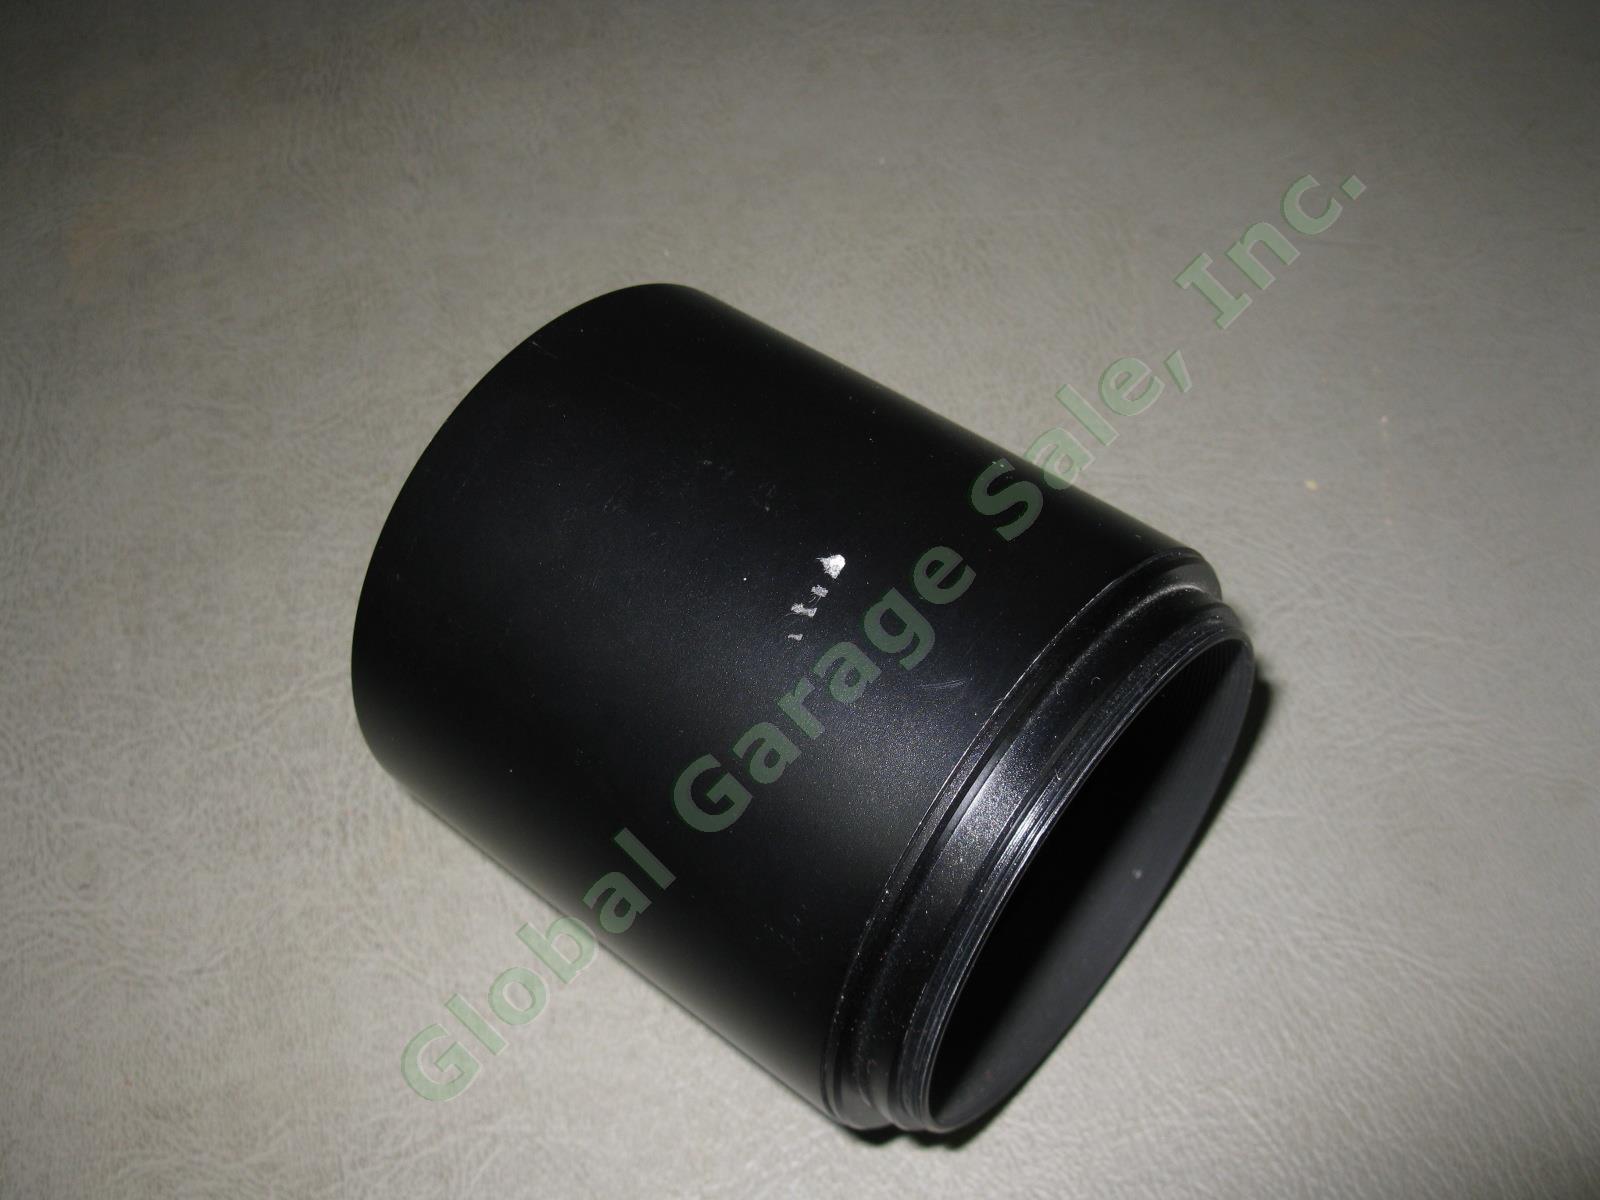 Pentax 500mm Angled Spotting Scope Telephoto Lens W/ Hood Cap Pouch Bag Bundle + 8